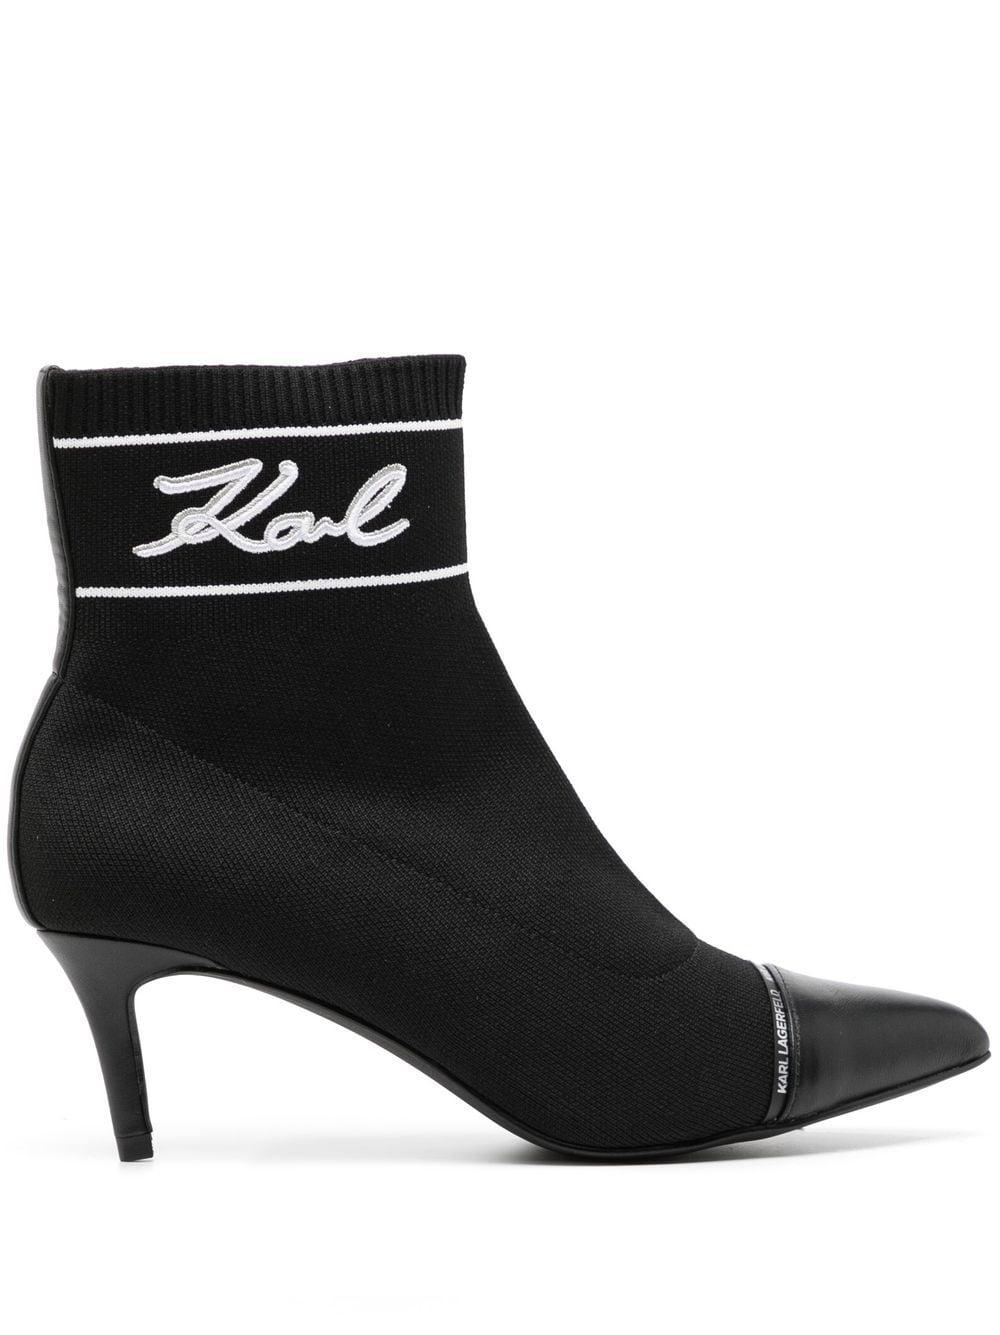 Karl Lagerfeld Pandara 60mm Ankle Boot in Black | Lyst